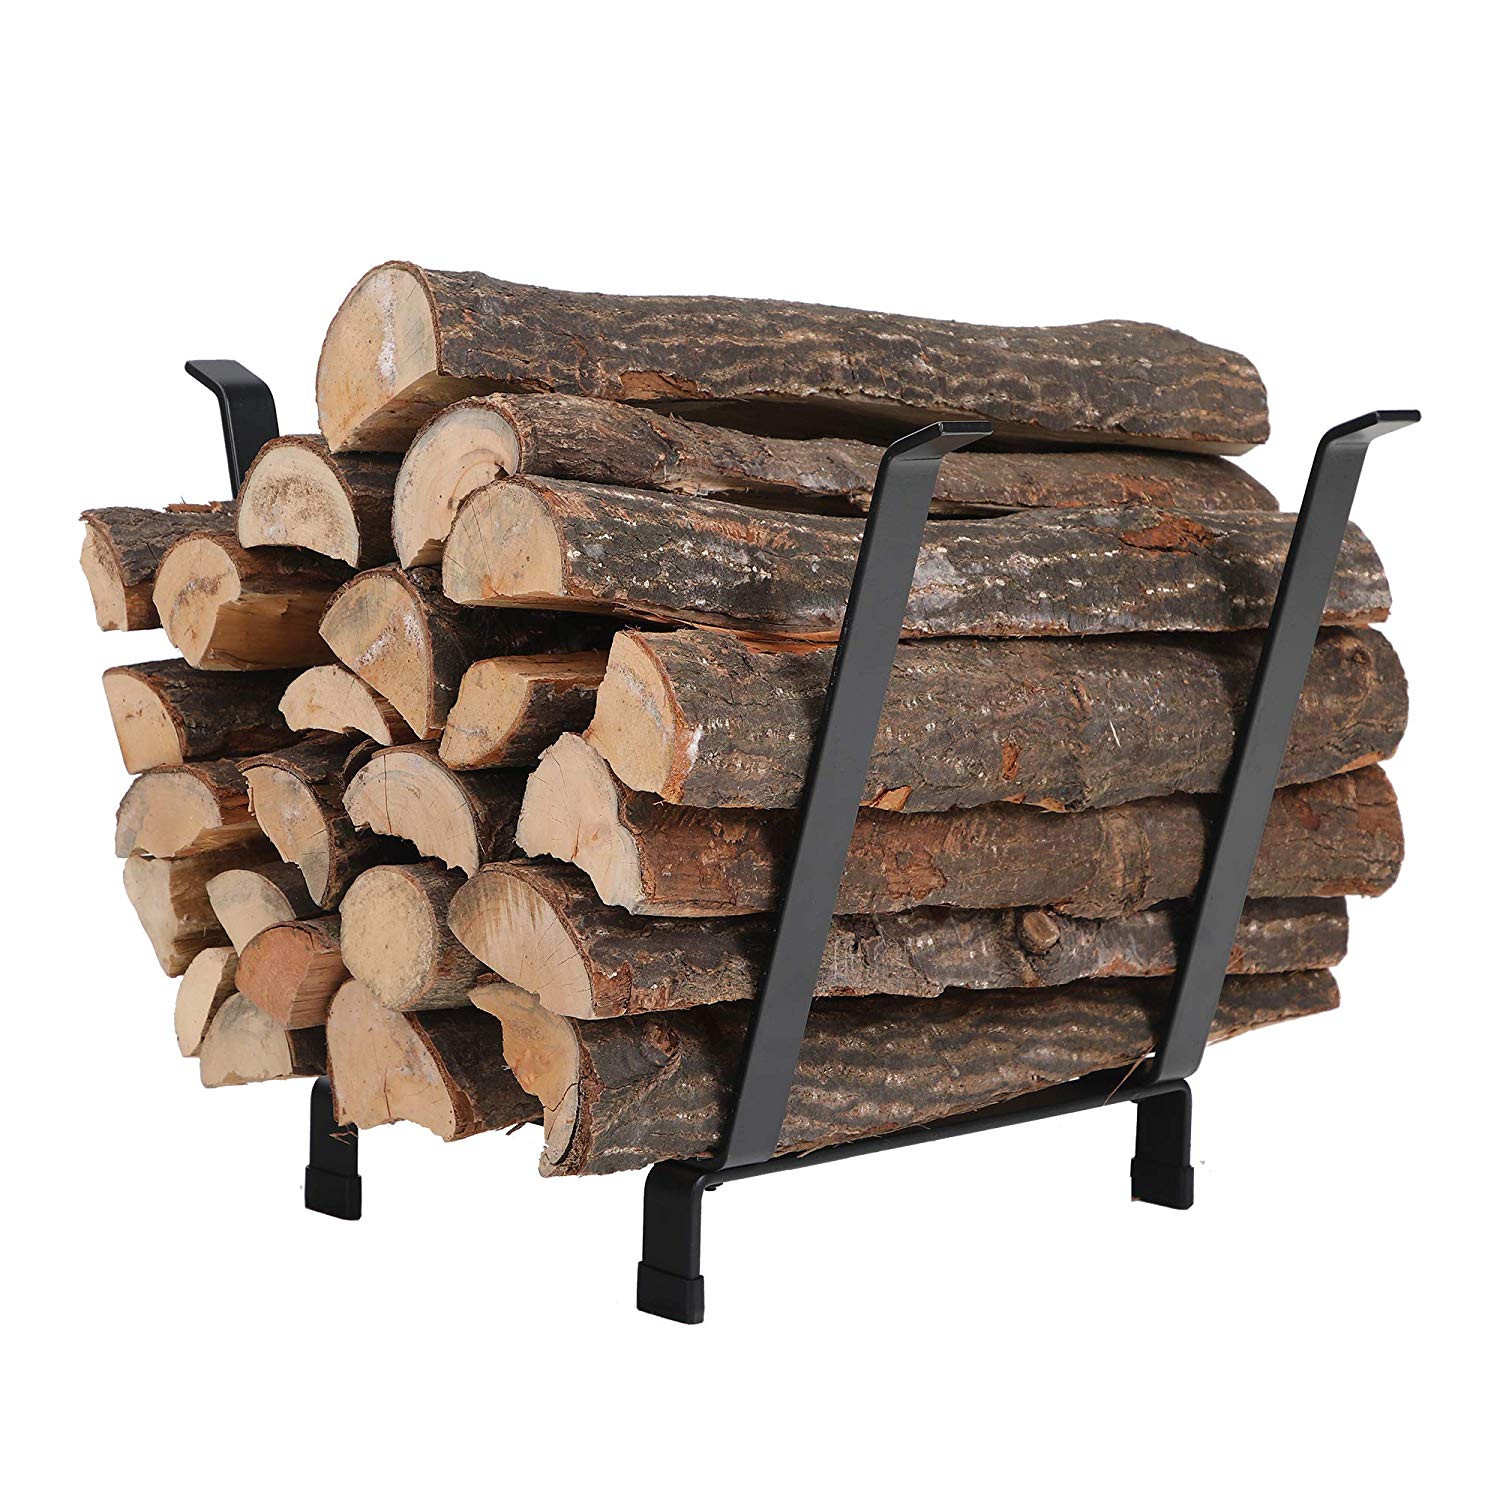 PHI VILLA 20 Inches Medium Decorative Indoor/Outdoor Firewood Log Rack Bin with Scrolls, Black